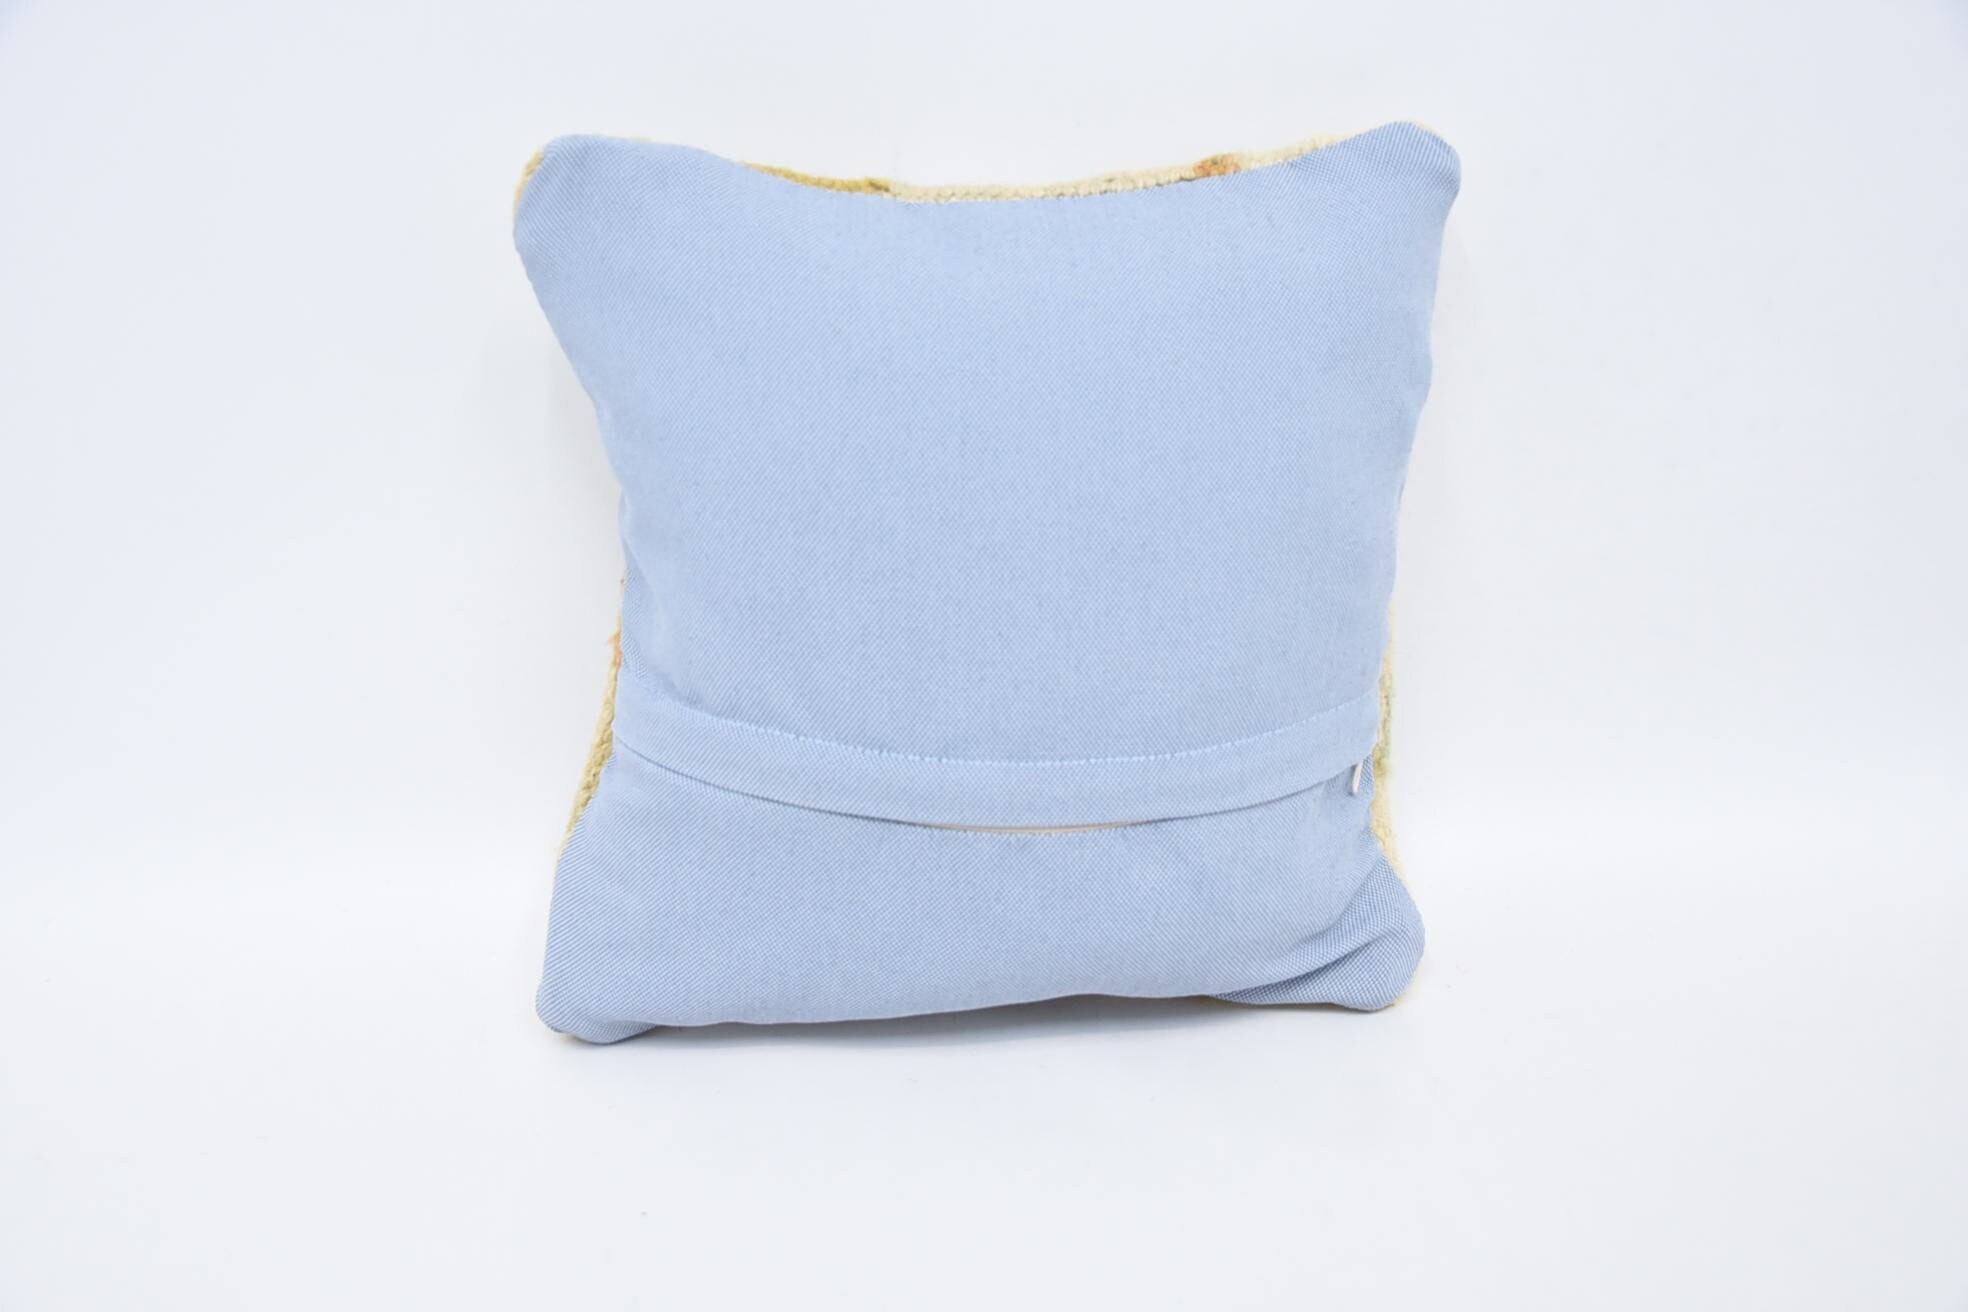 12"x12" White Cushion Cover, Kilim Pillow, Morroccon Kilim Cushion Cushion Cover, Throw Kilim Pillow, Vintage Kilim Pillow